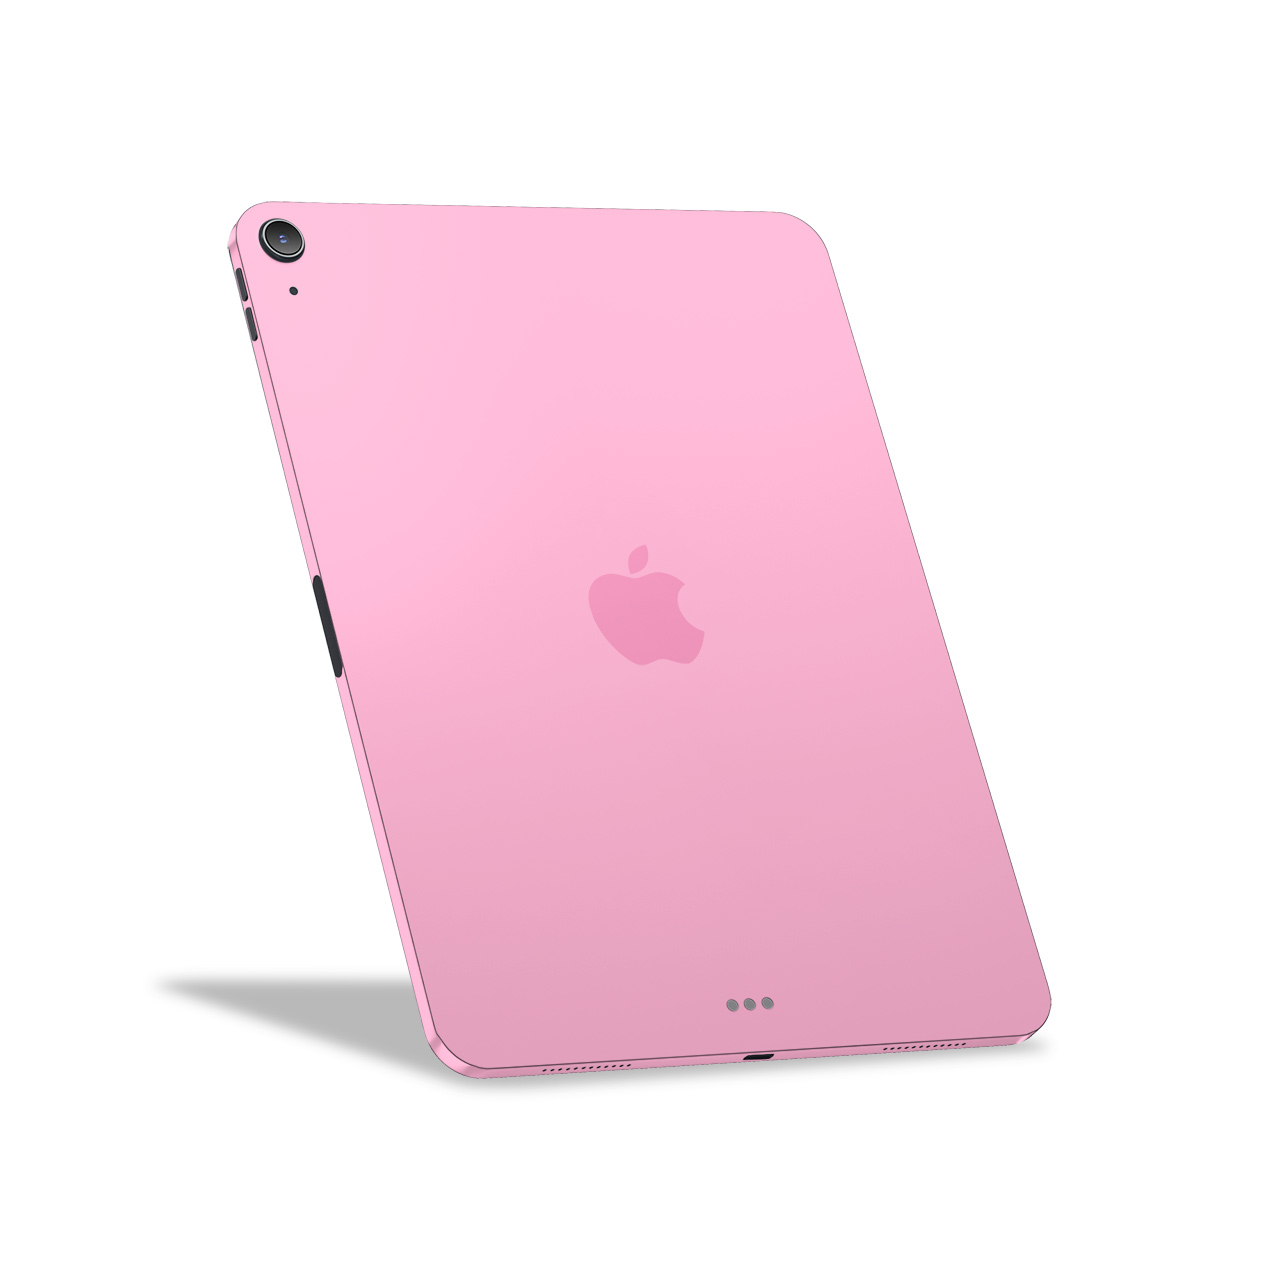 Aesthetic Pink iPad Air [4th Gen] Skin